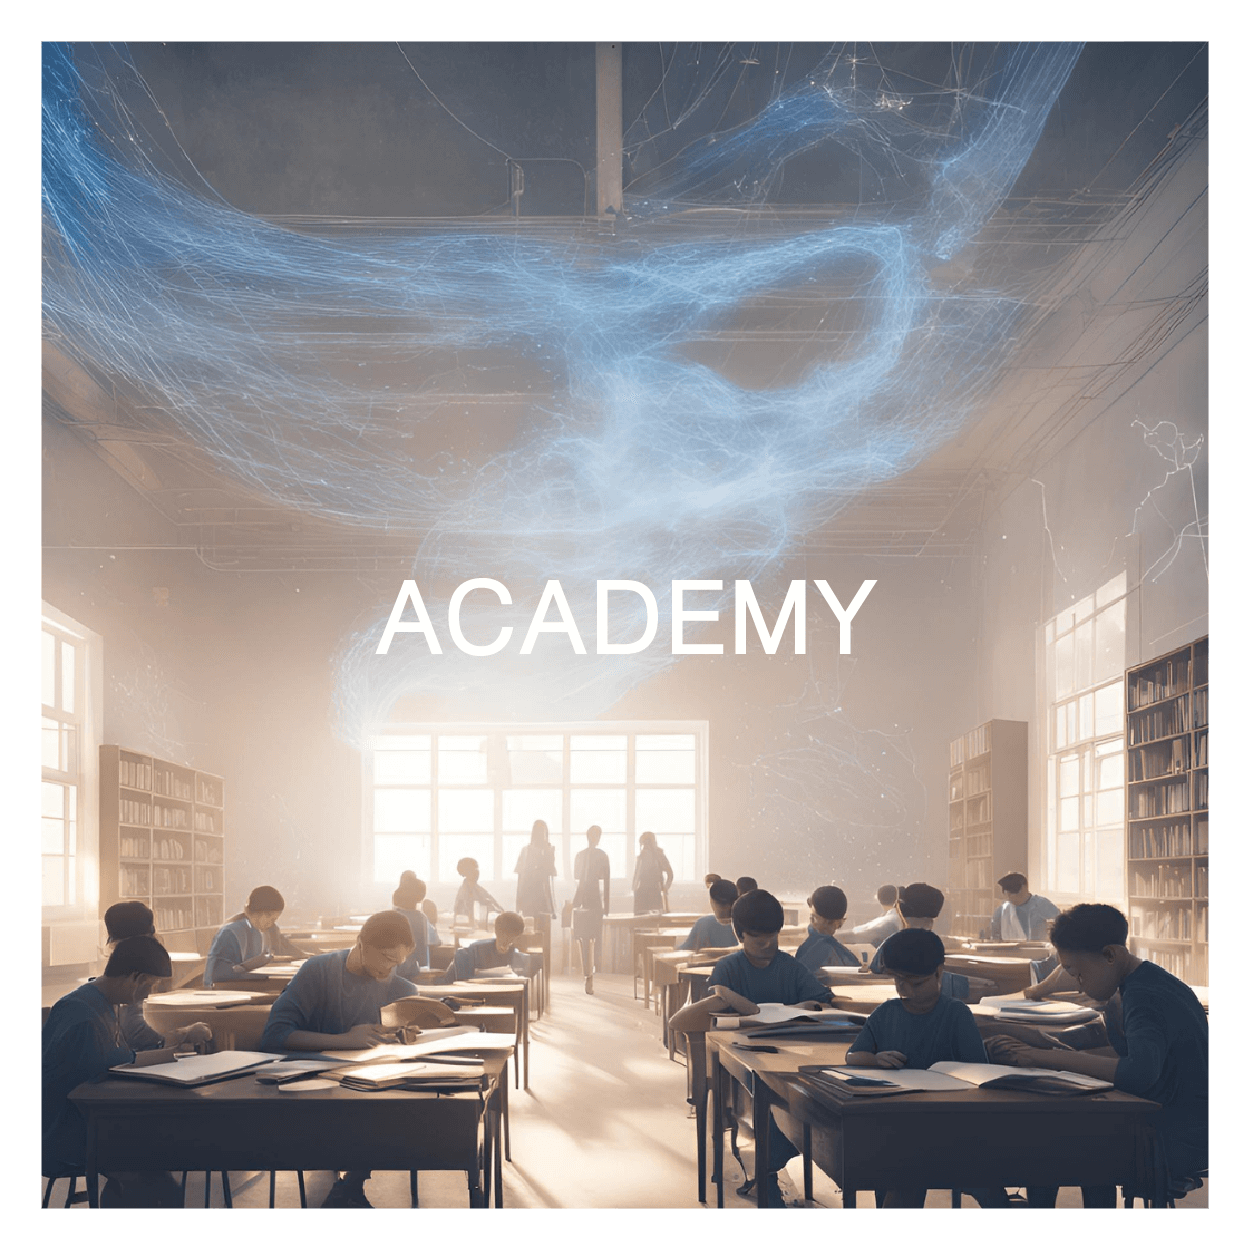 Home academy